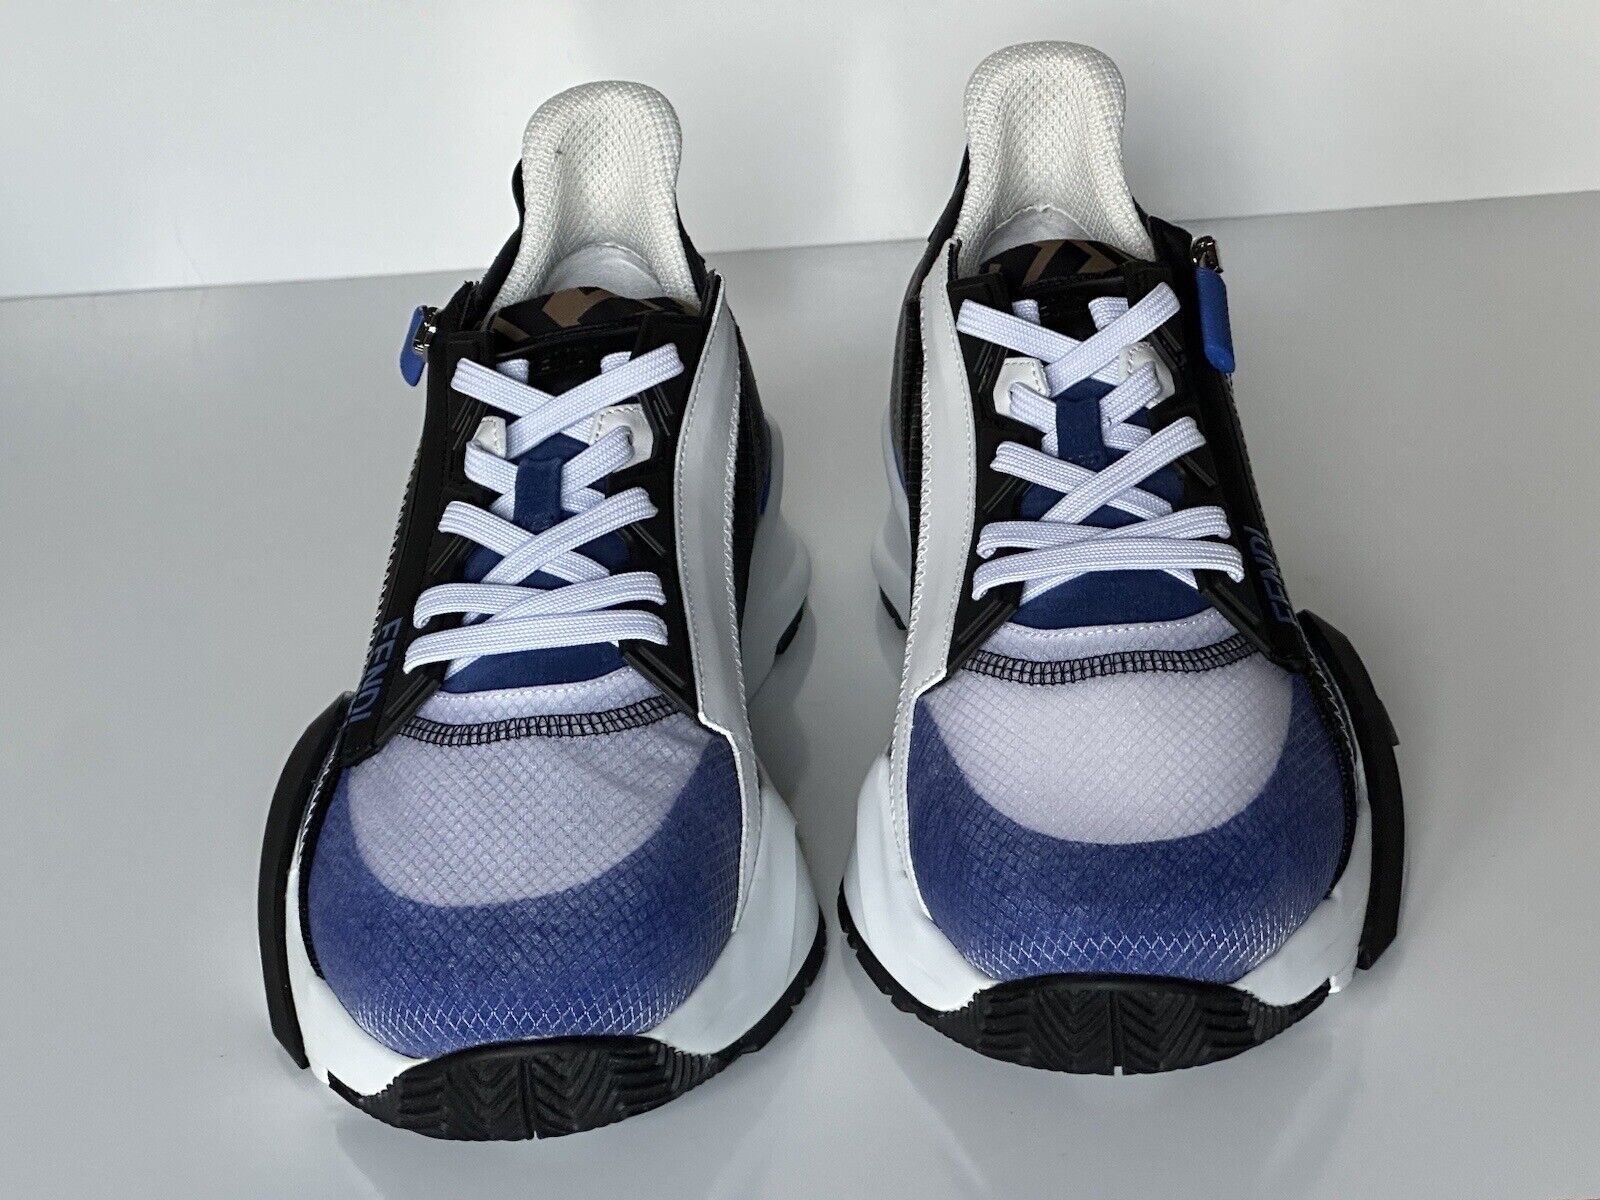 NIB Мужские кроссовки Fendi Flow из кожи/ткани, 870 долларов США, синие 12 США (45 евро) 7E1392 IT